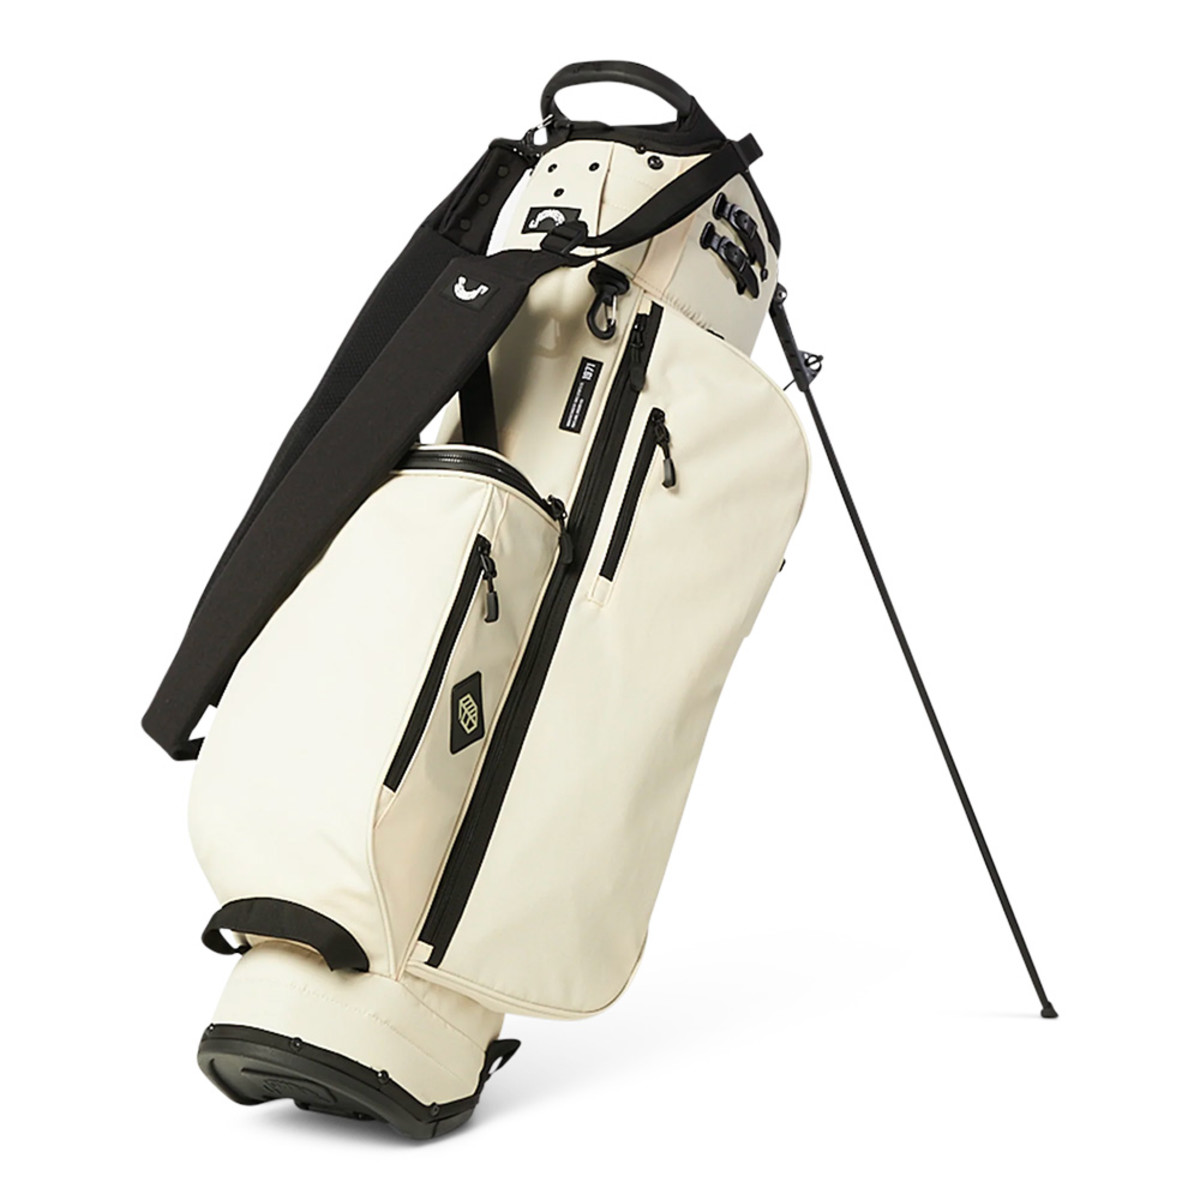 Trouper R golf bag